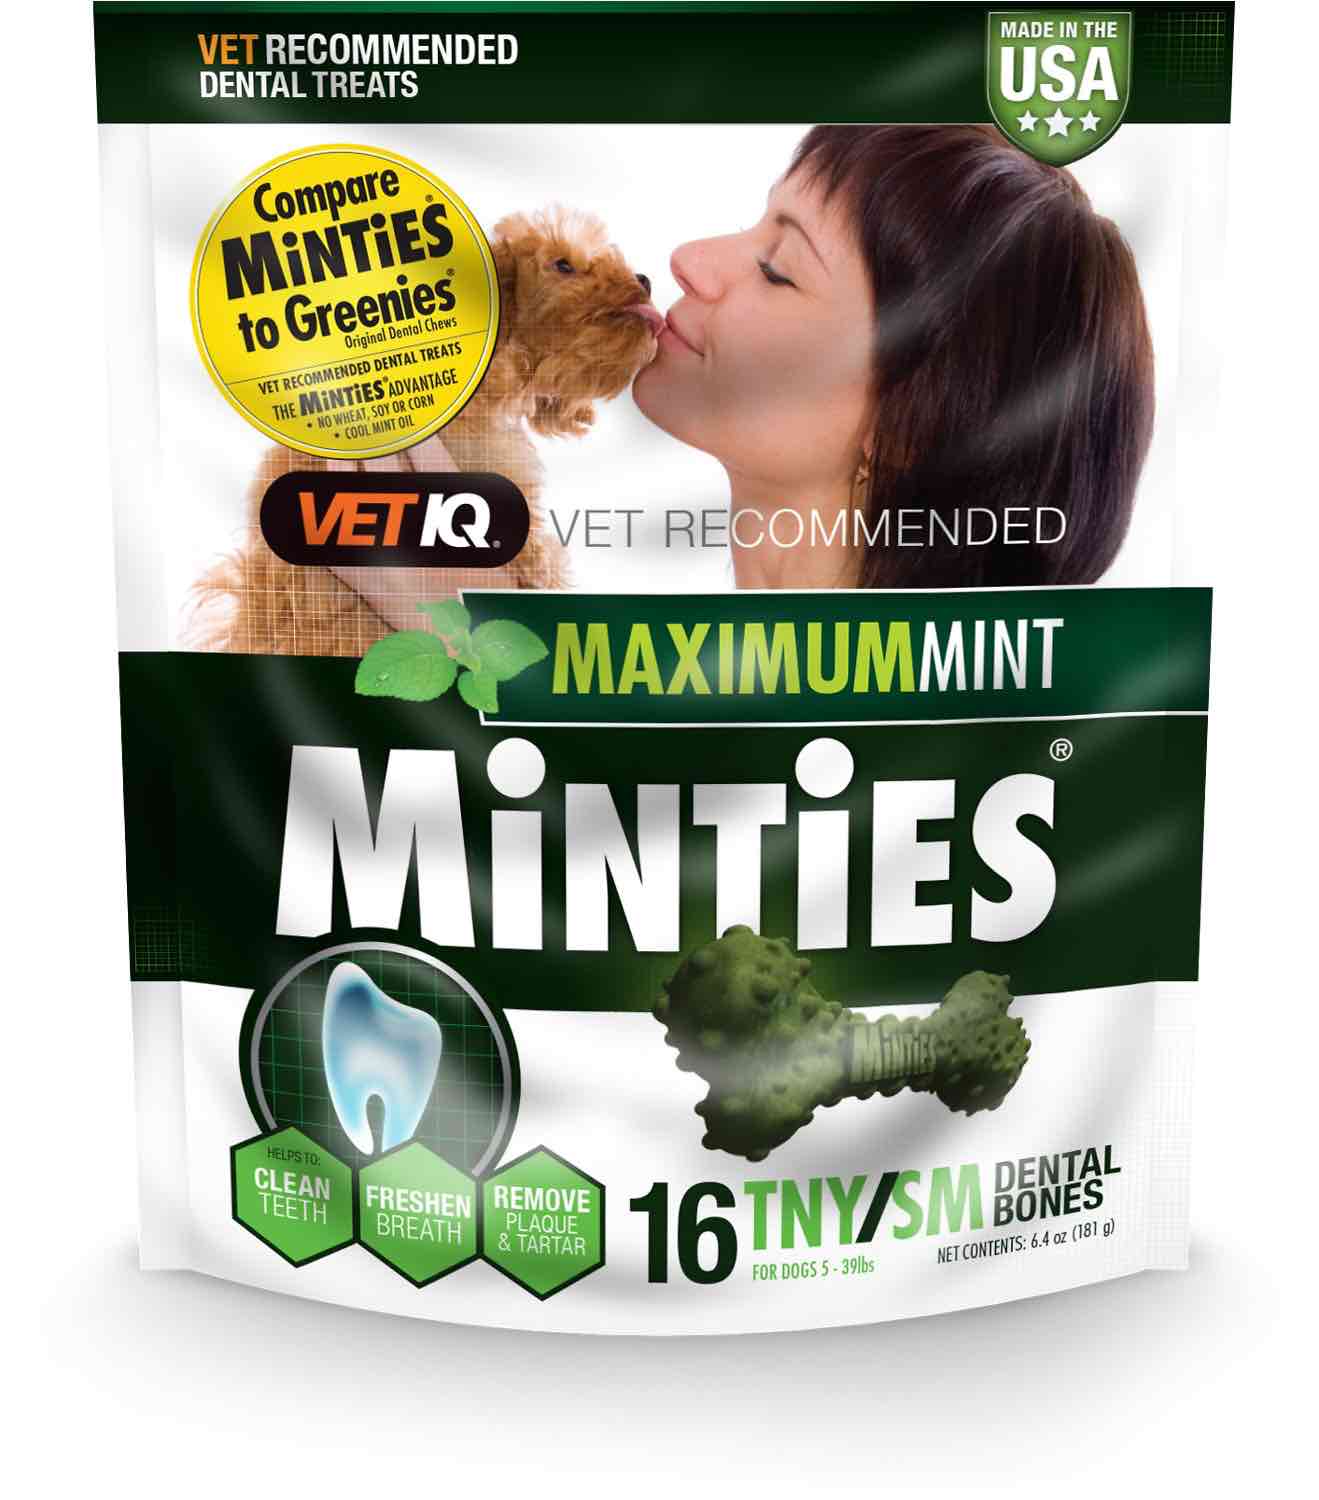 VetIQ Minties 16 dental bones Tiny/Small for dogs 5-39 lbs 1